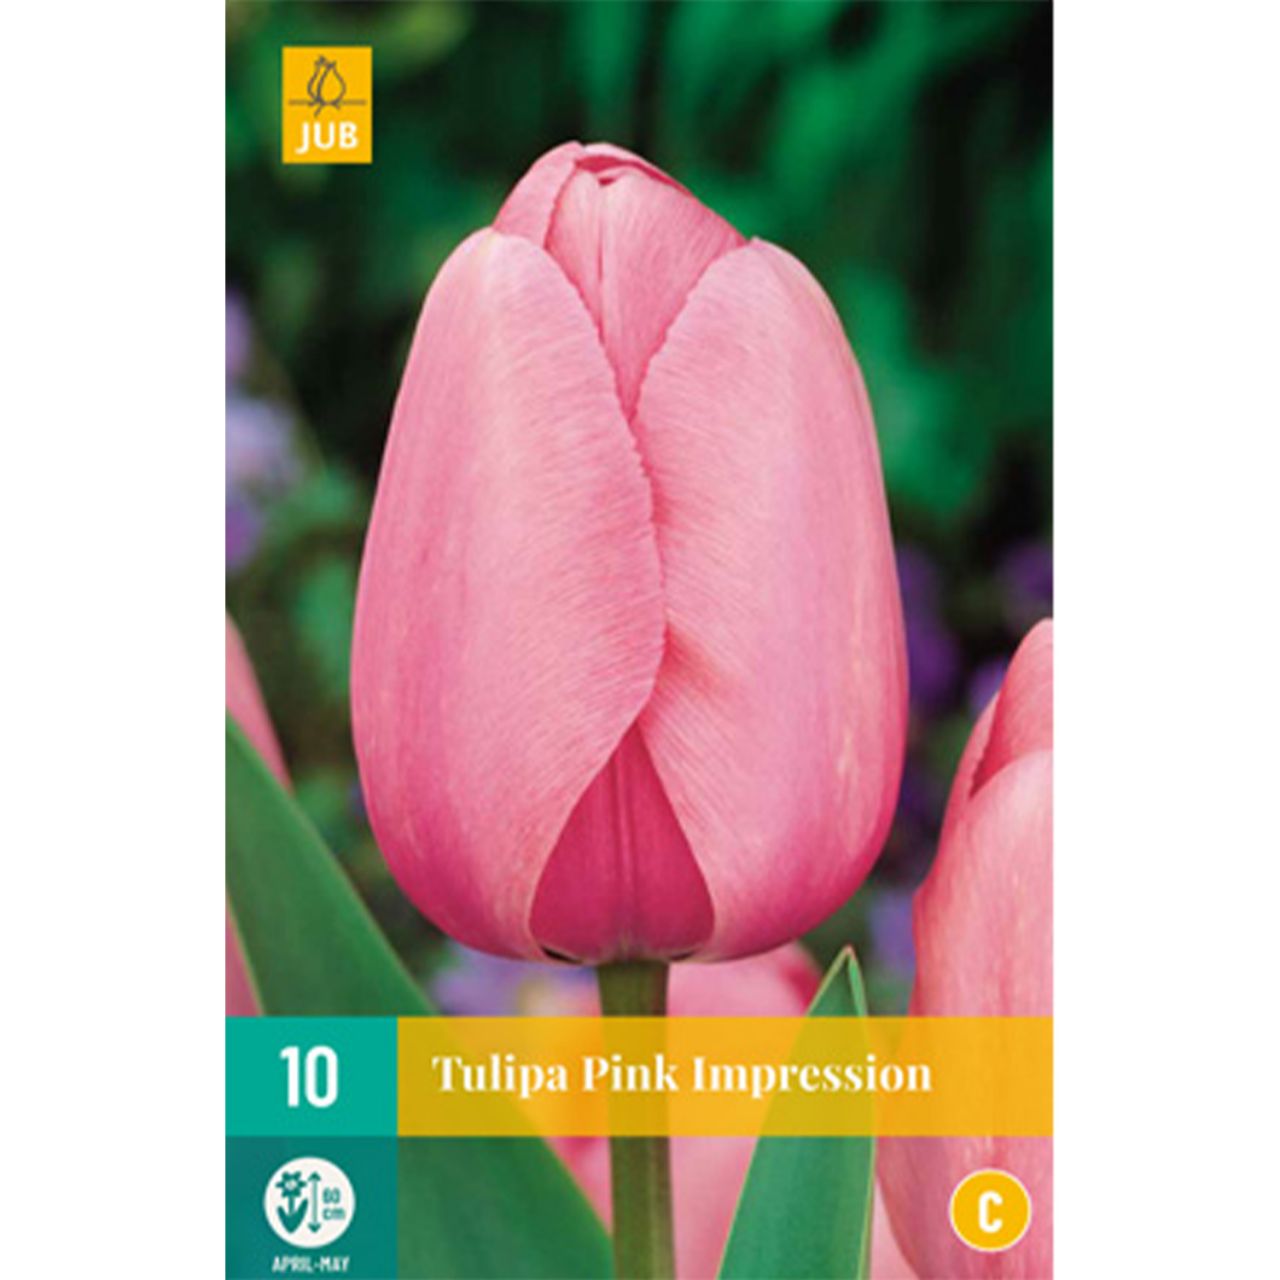 Kategorie <b>Herbst-Blumenzwiebeln </b> - Darwin-Hybrid Tulpe 'Pink Impression' - 10 Stück - Tulipa 'Pink Impression'